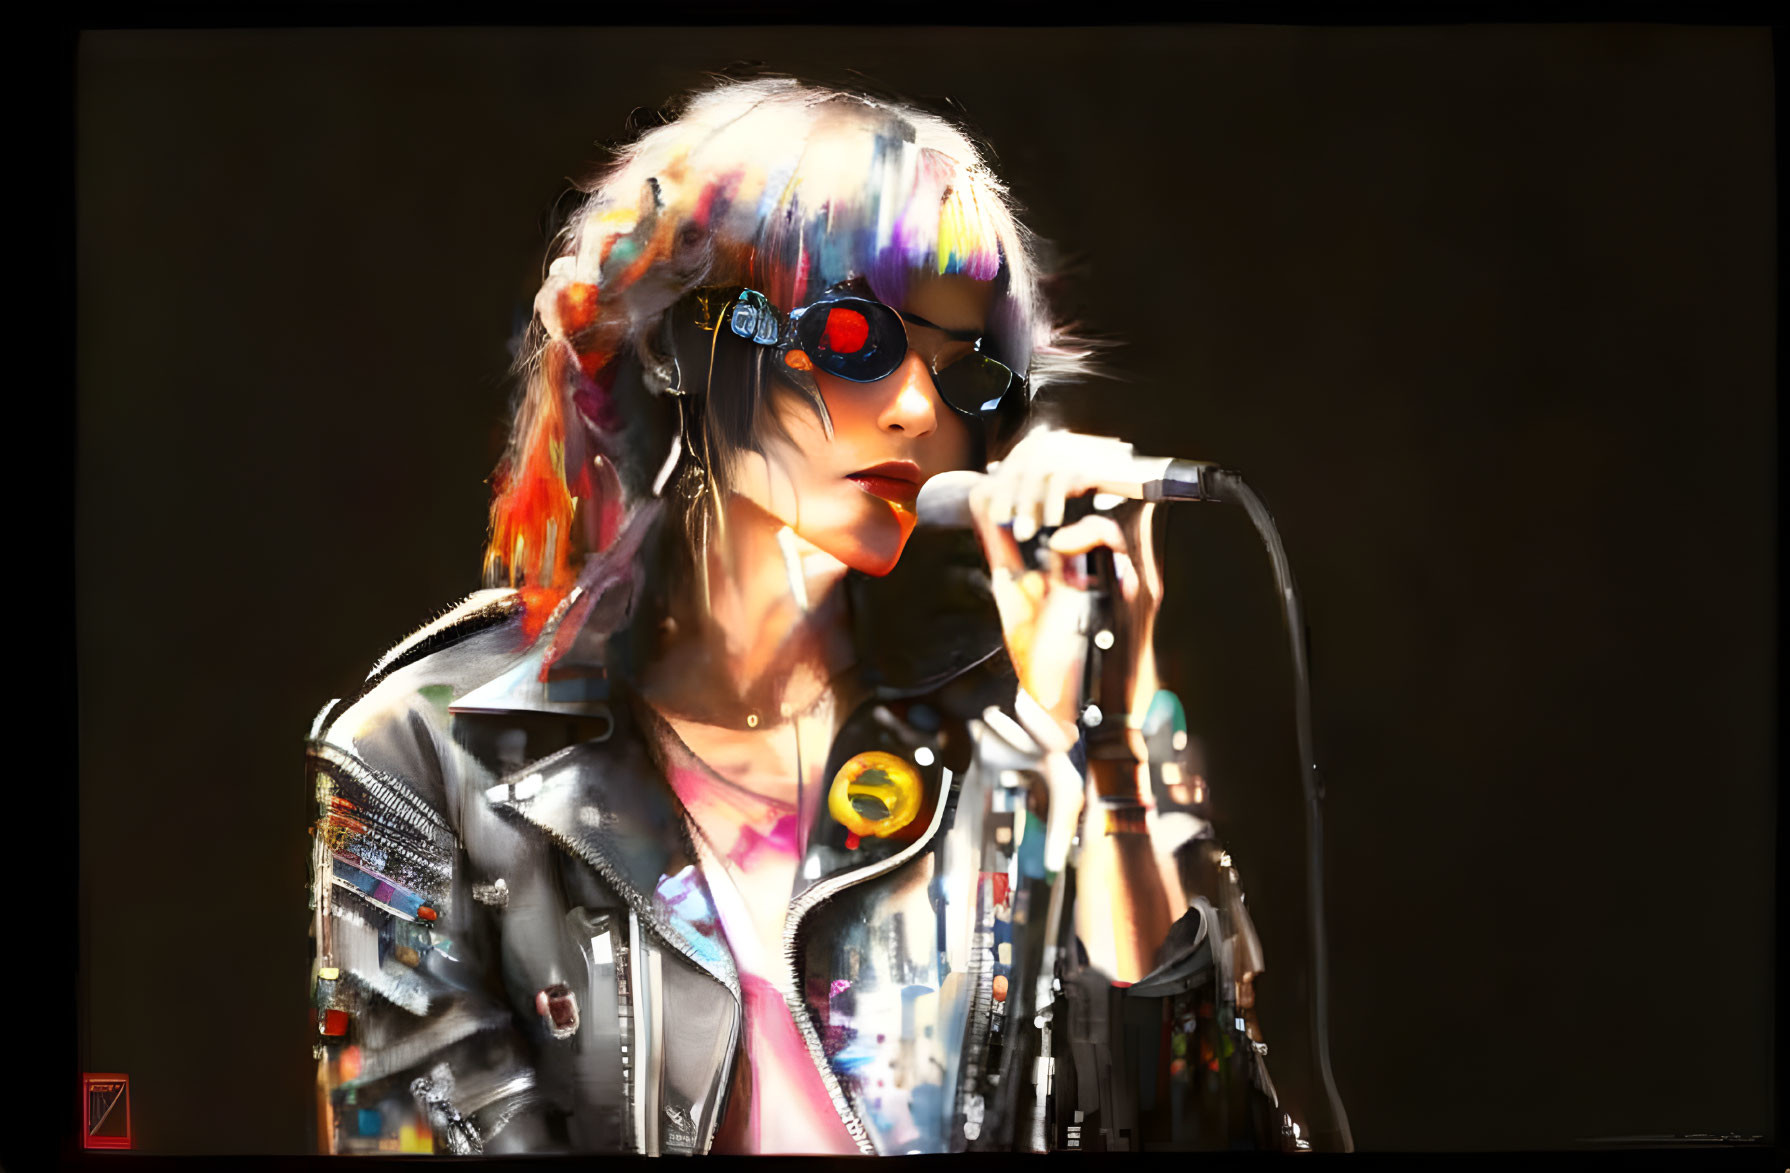 Colorful Hair and Sunglasses Punk-Rock Singer Artwork